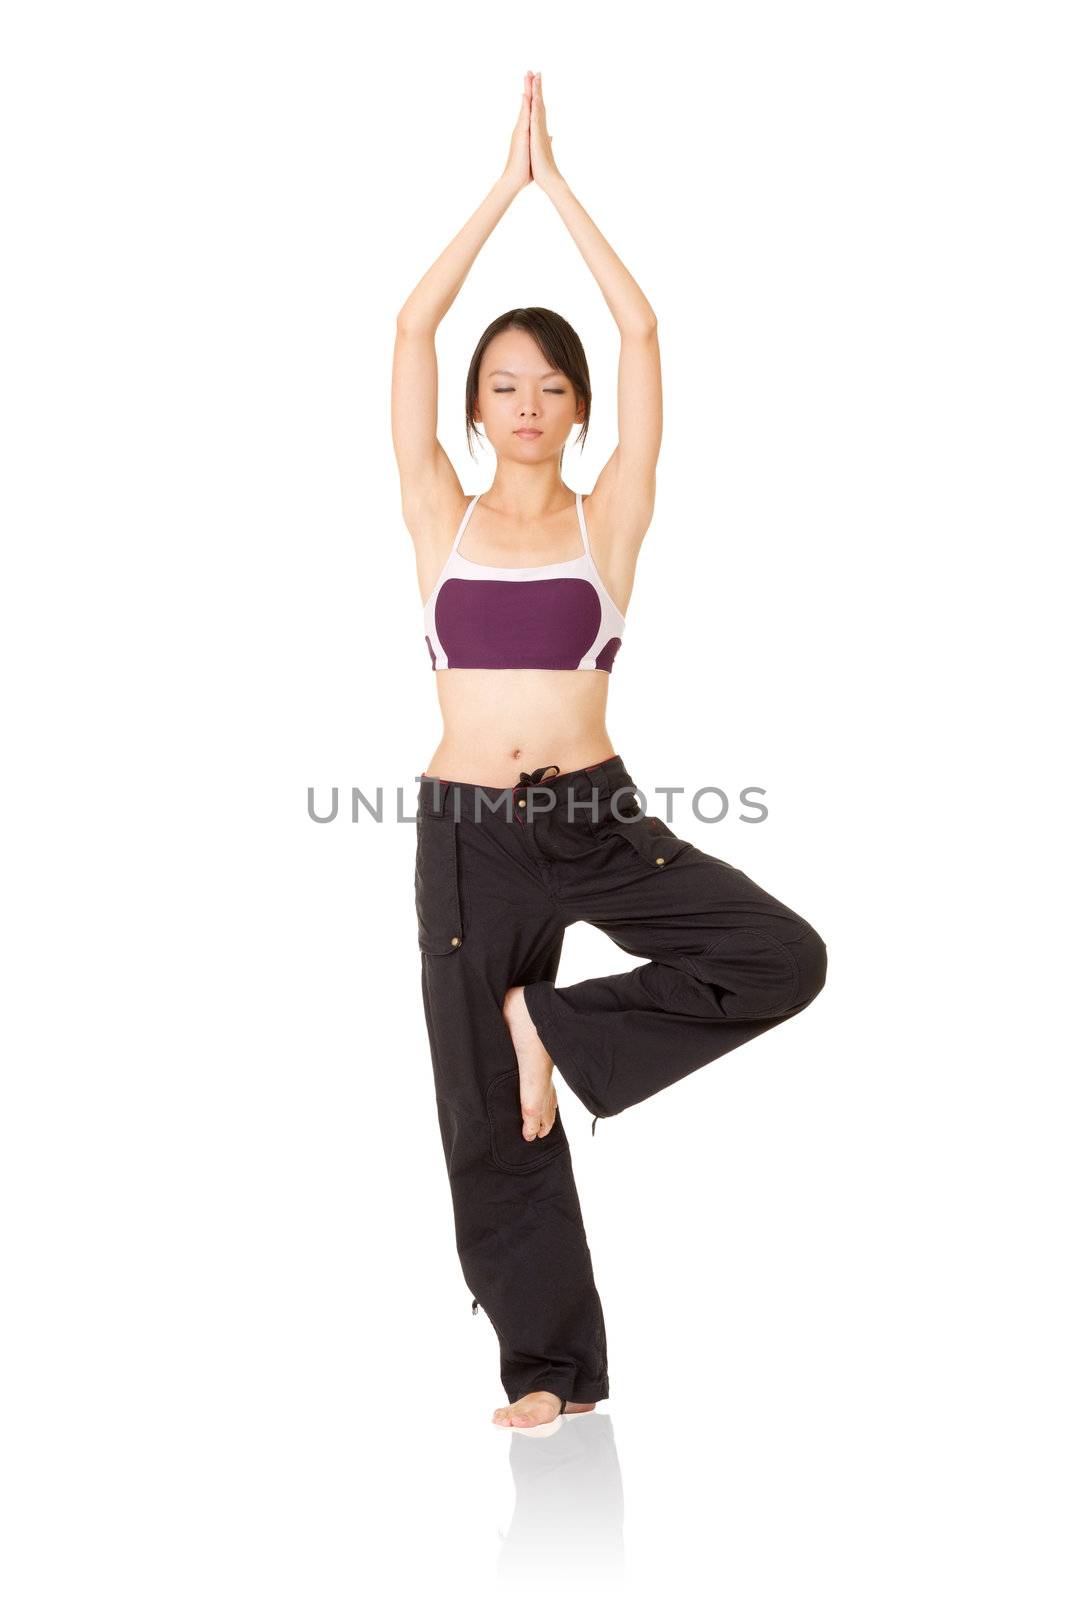 Professional yoga woman exercising, full length portrait isolated on white background.